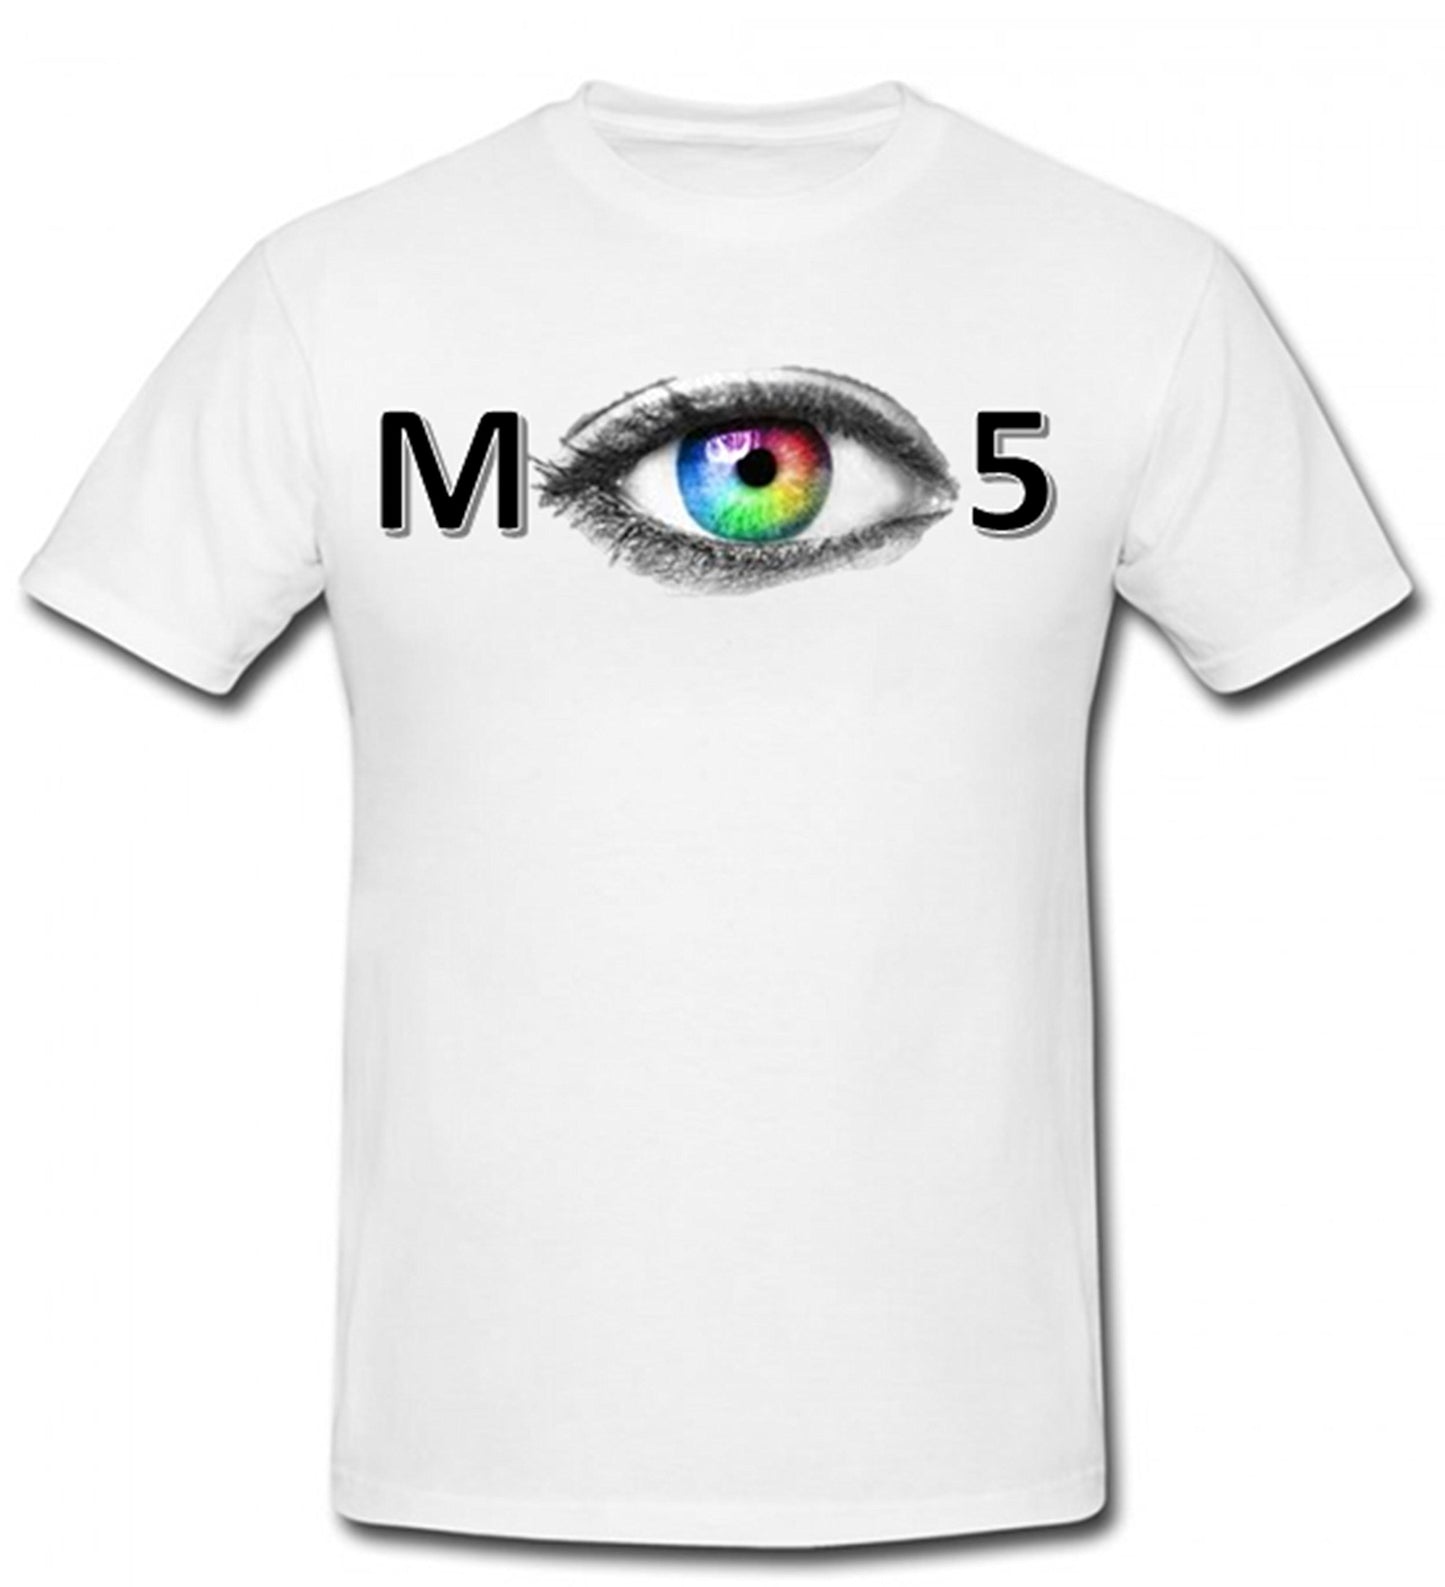 Bear Essentials Clothing. MI5 T-Shirt (M, White) - Army 1157 kit Army 1157 Kit